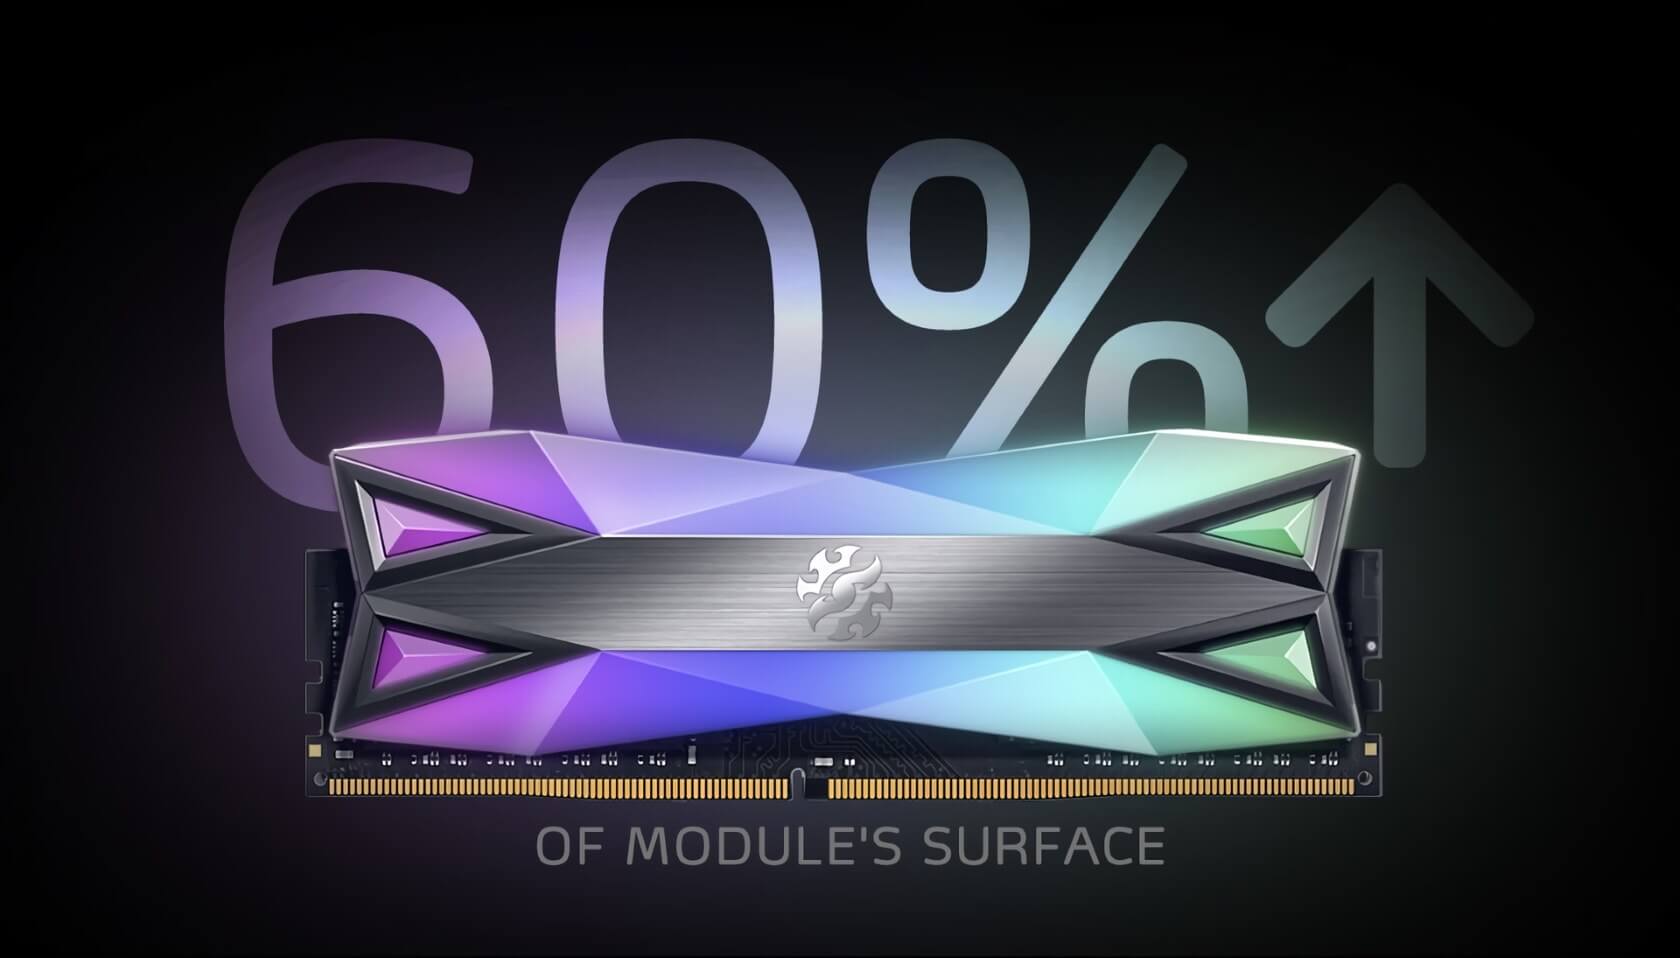 Adata shows off 'diamond-cut' RGB-covered DDR4 RAM kit | TechSpot